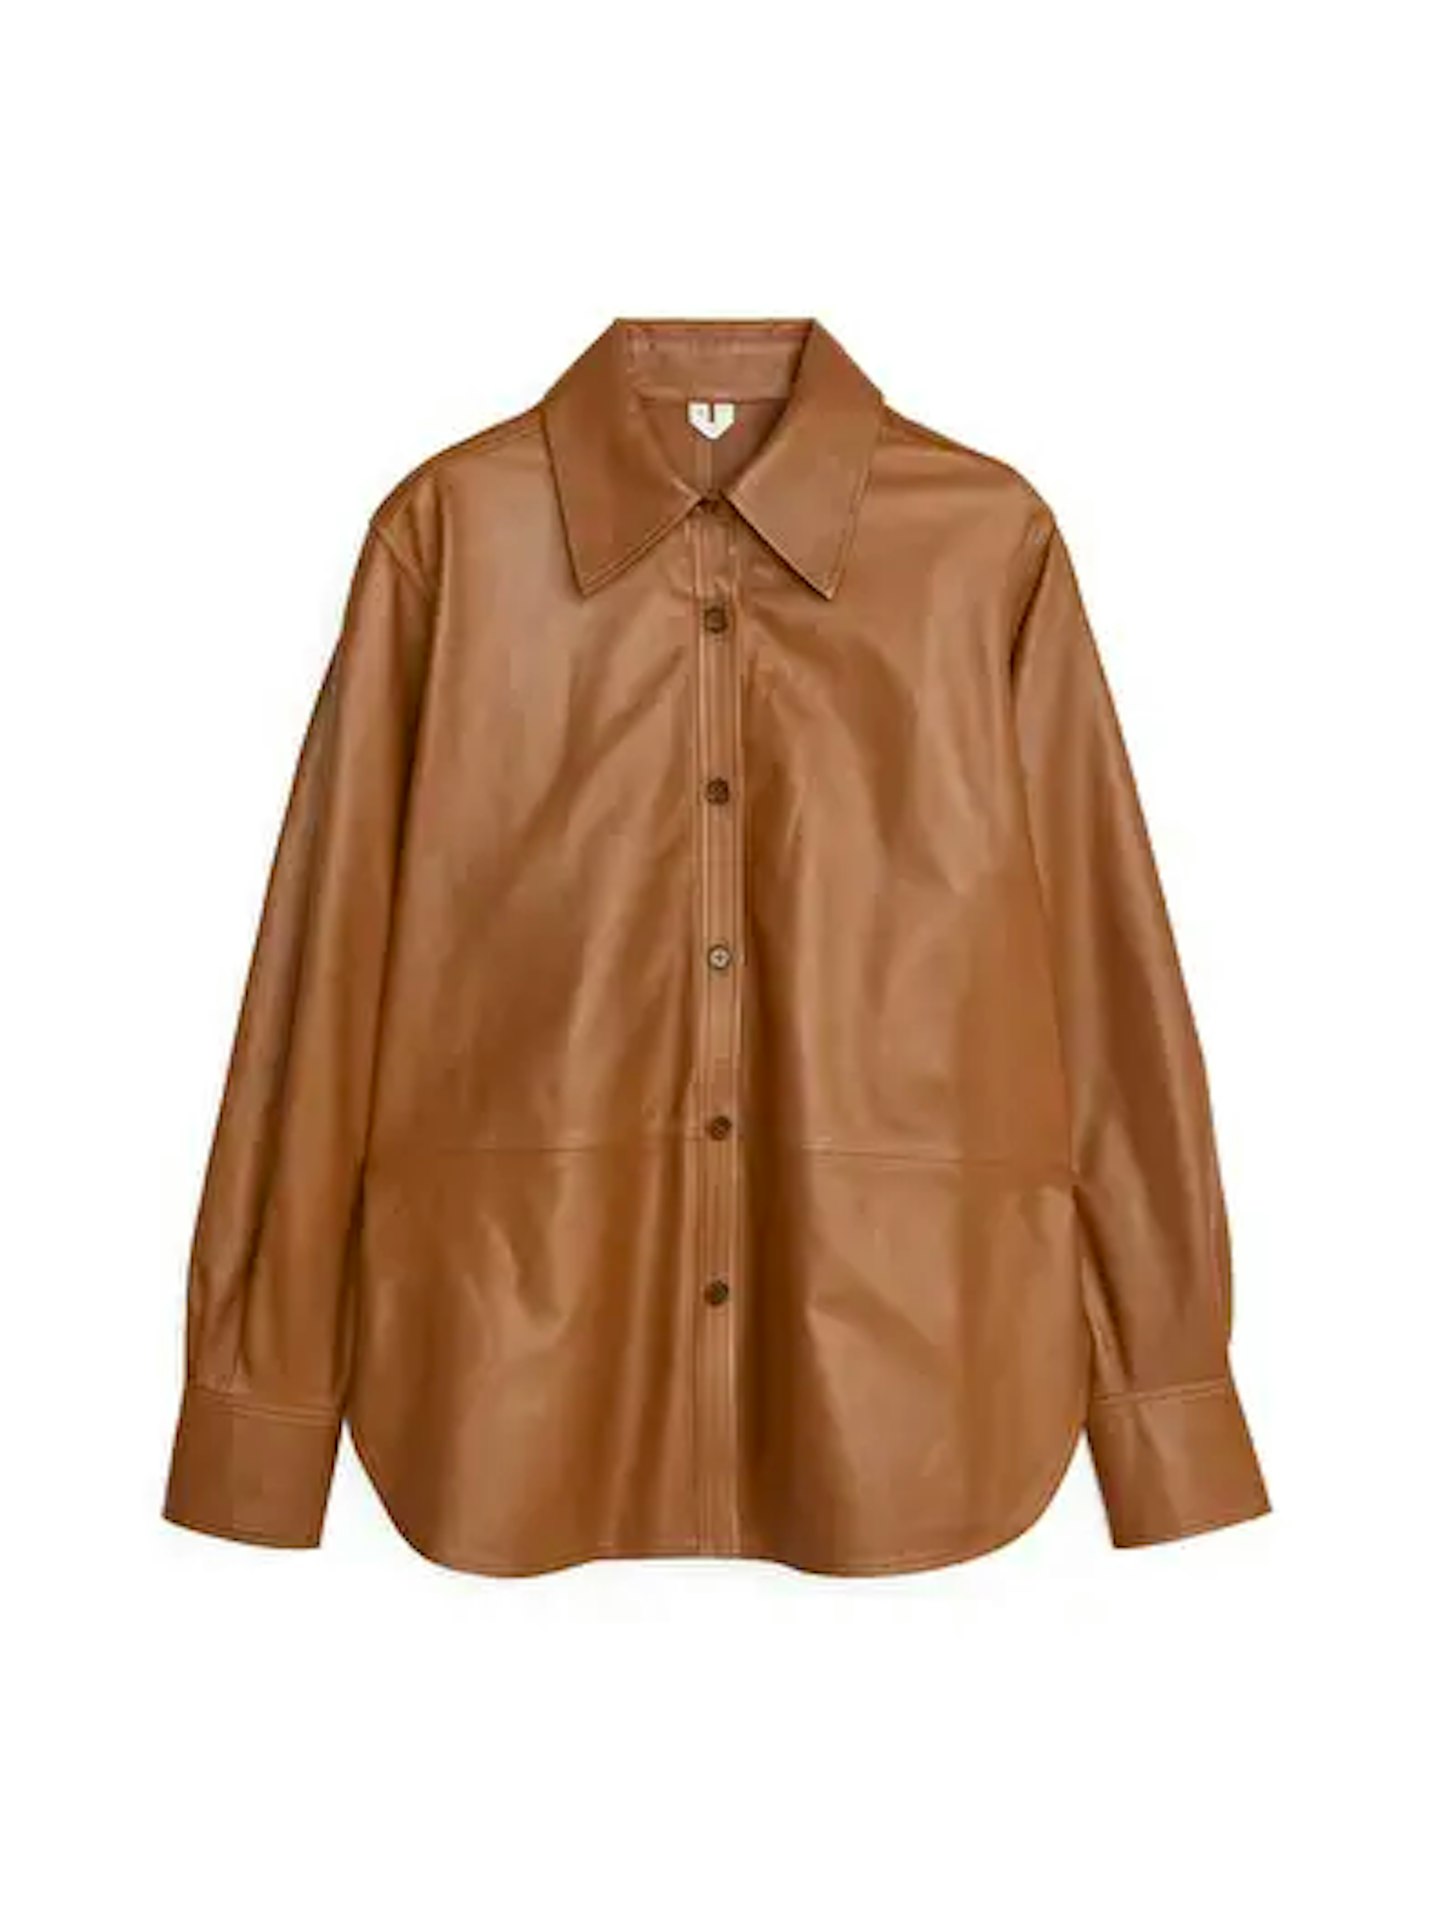 Arket, Leather Shirt, £225